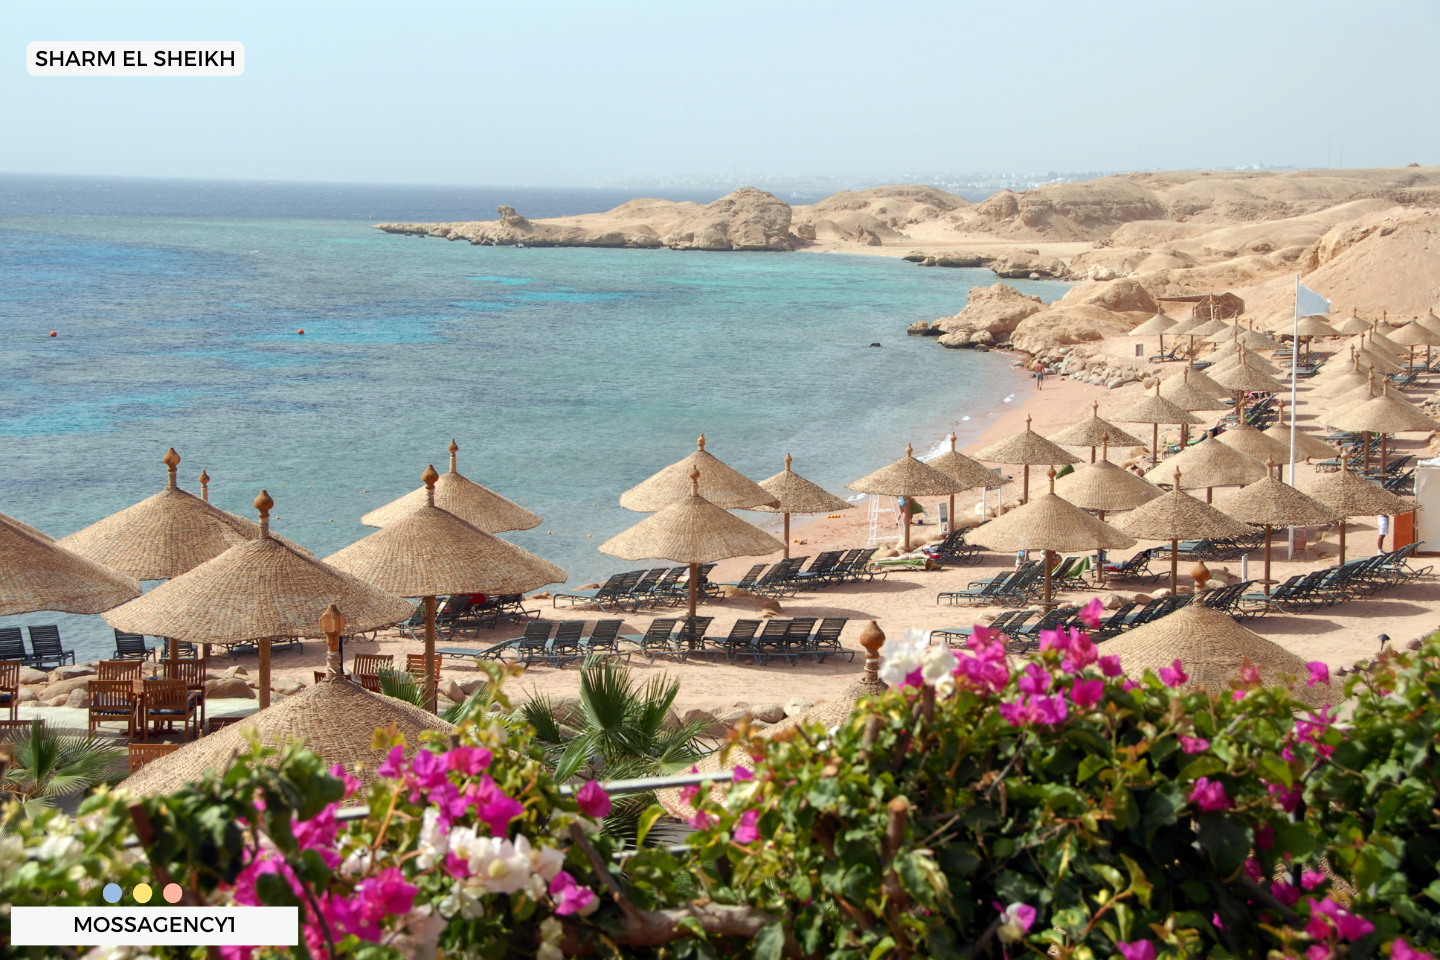 Sharm El Sheikh: Egypt's Premier Red Sea Resort